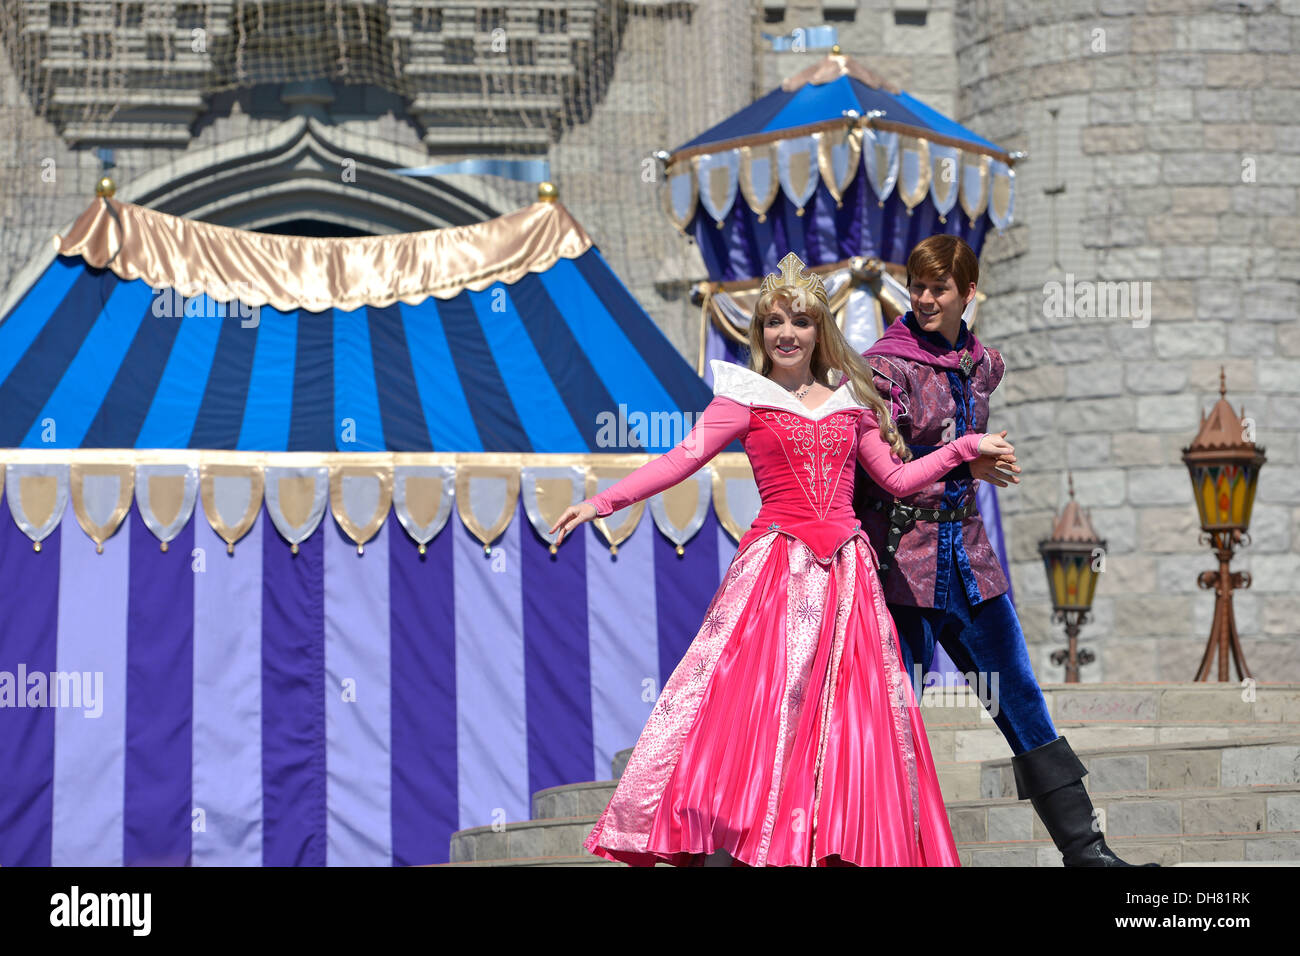 Sleeping Beauty and her Prince on stage at Cinderella Castle, Magic Kingdom, Disney World Resort, Orlando Florida Stock Photo